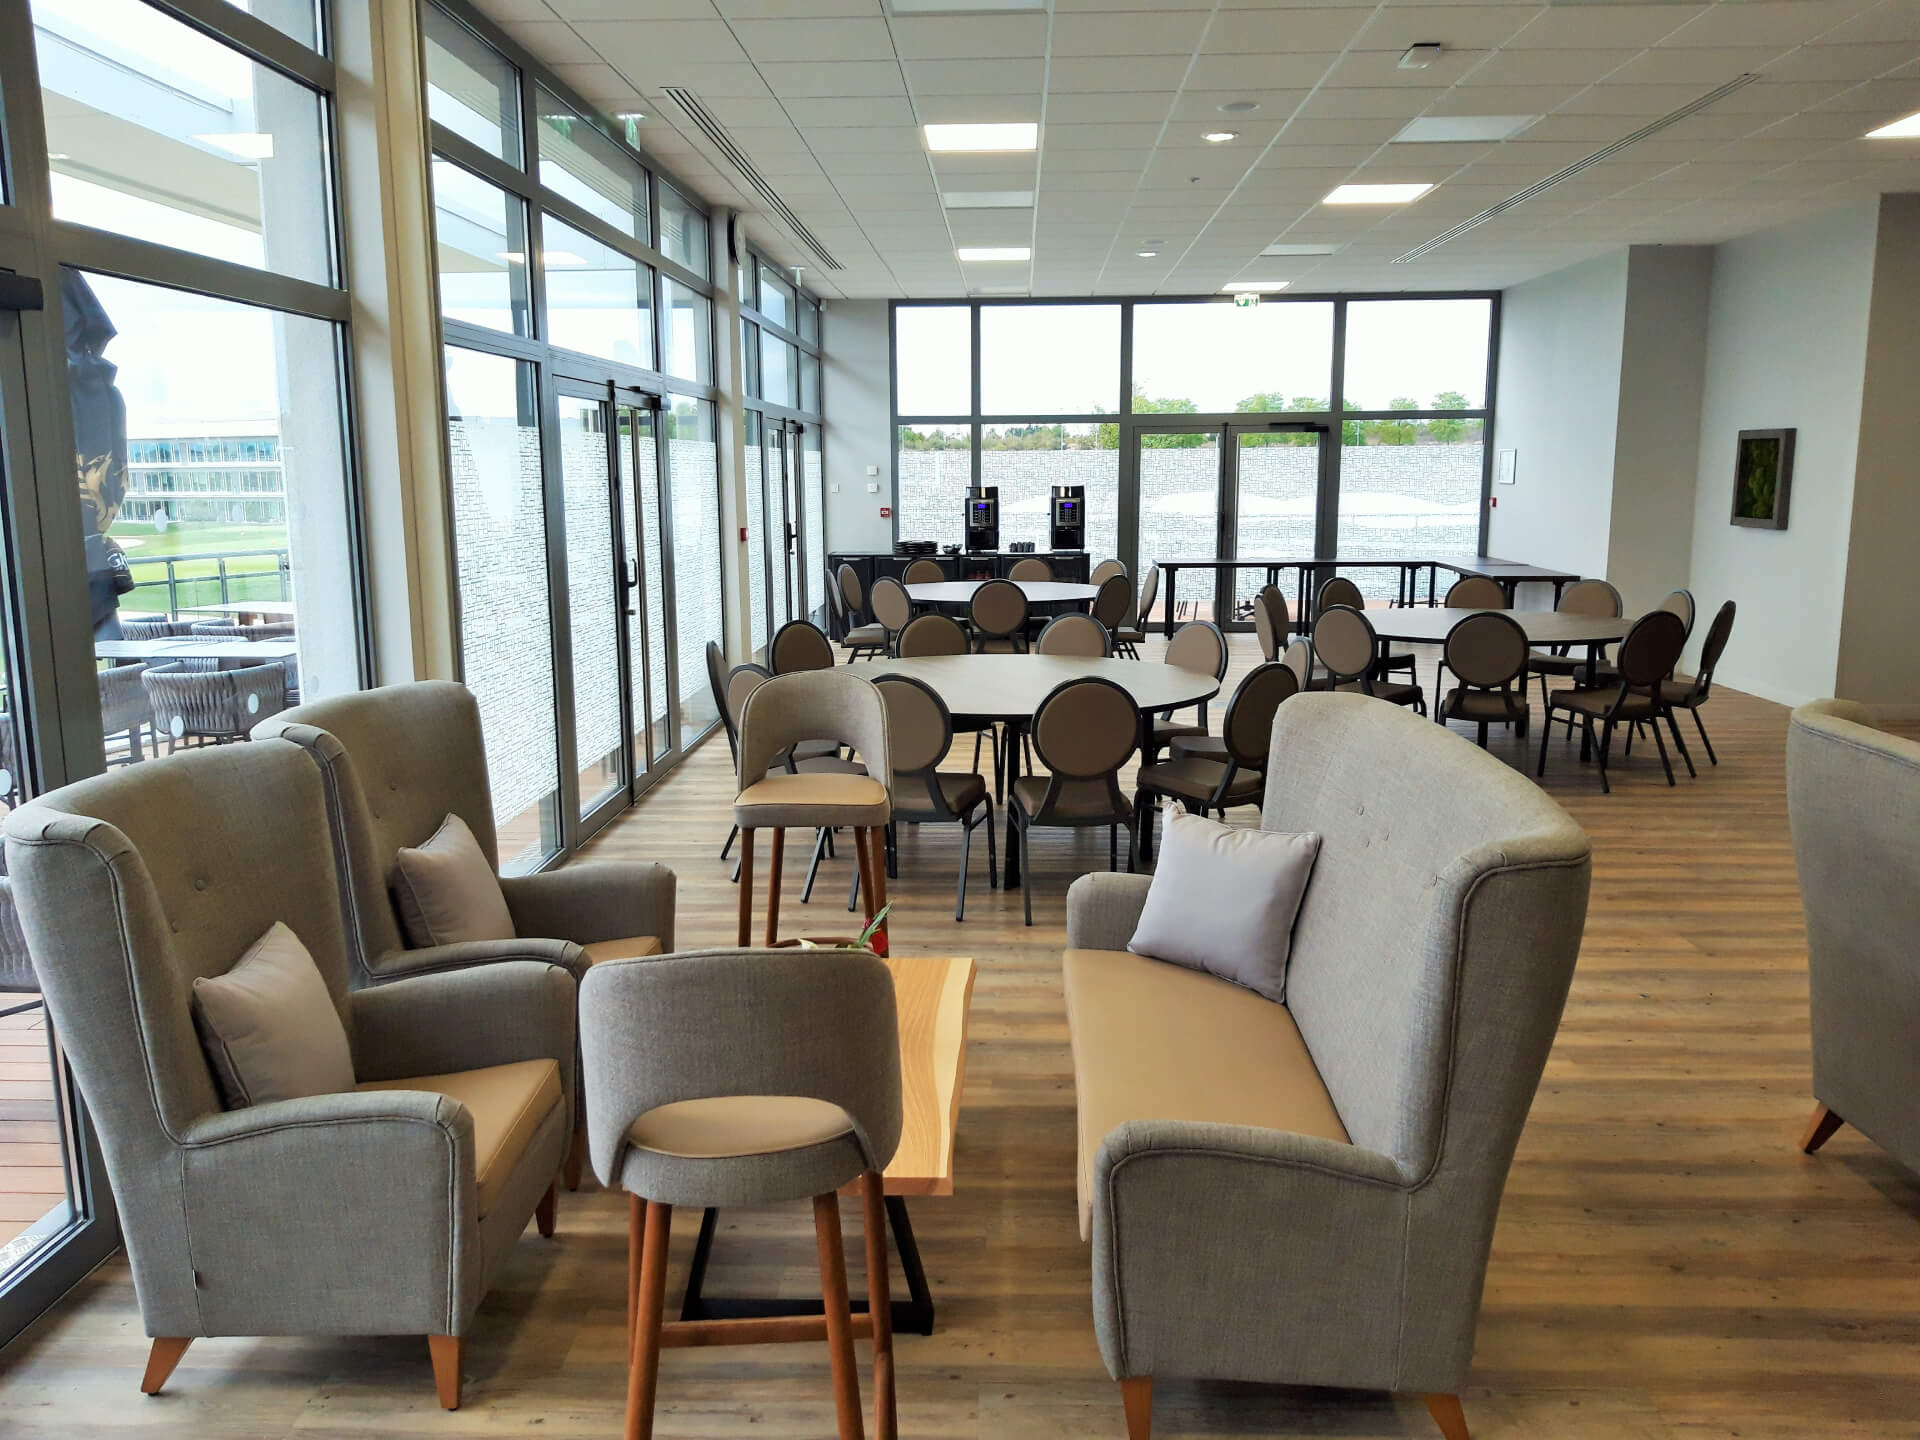 Salas de reuniões perto do aeroporto Roissy CDG